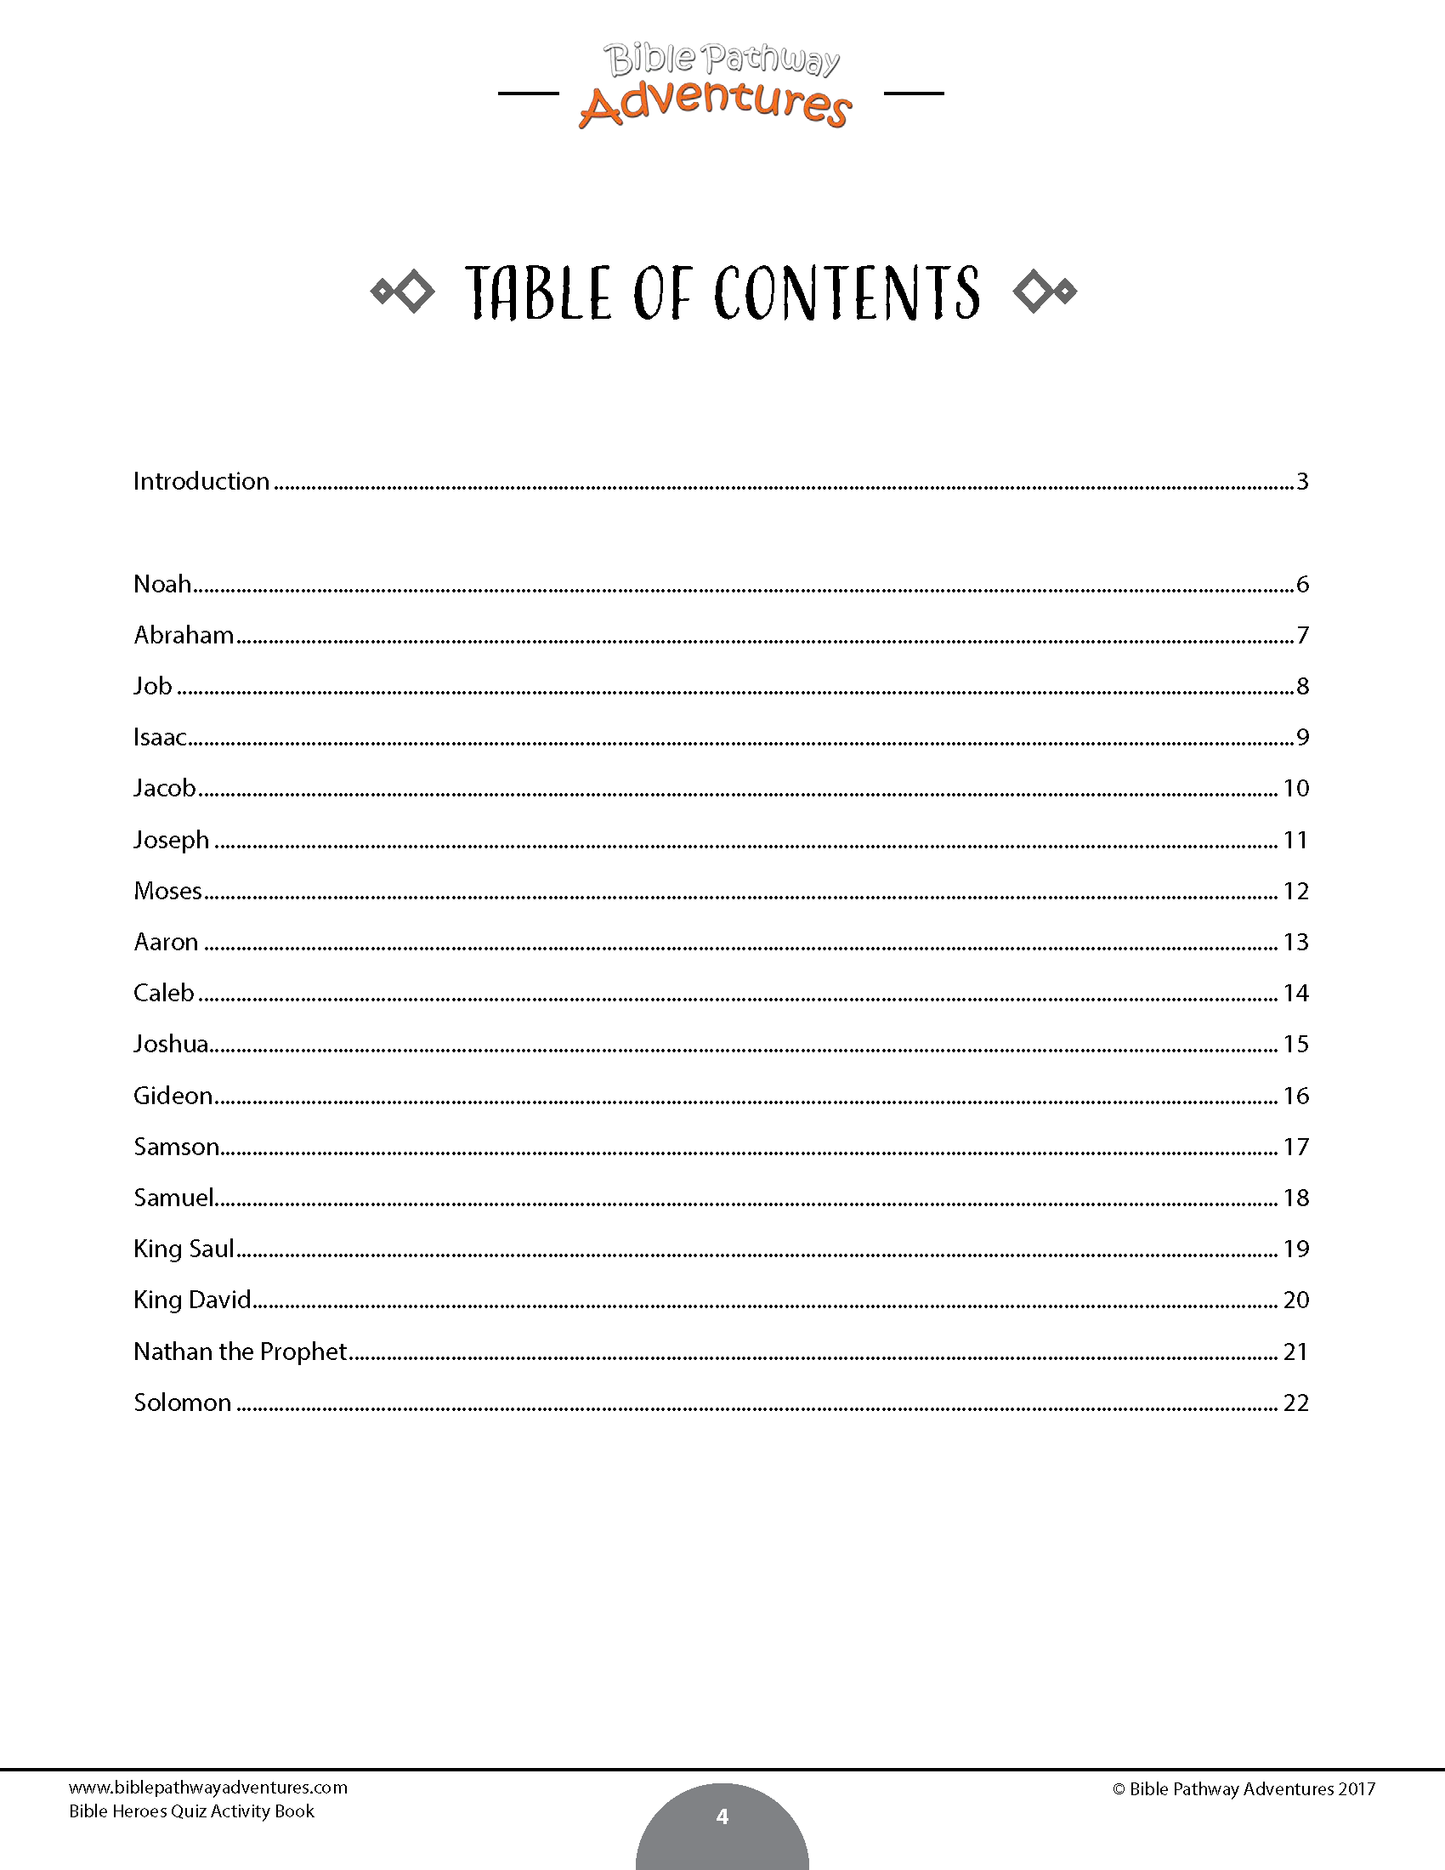 Bible Heroes Quiz Book (PDF)